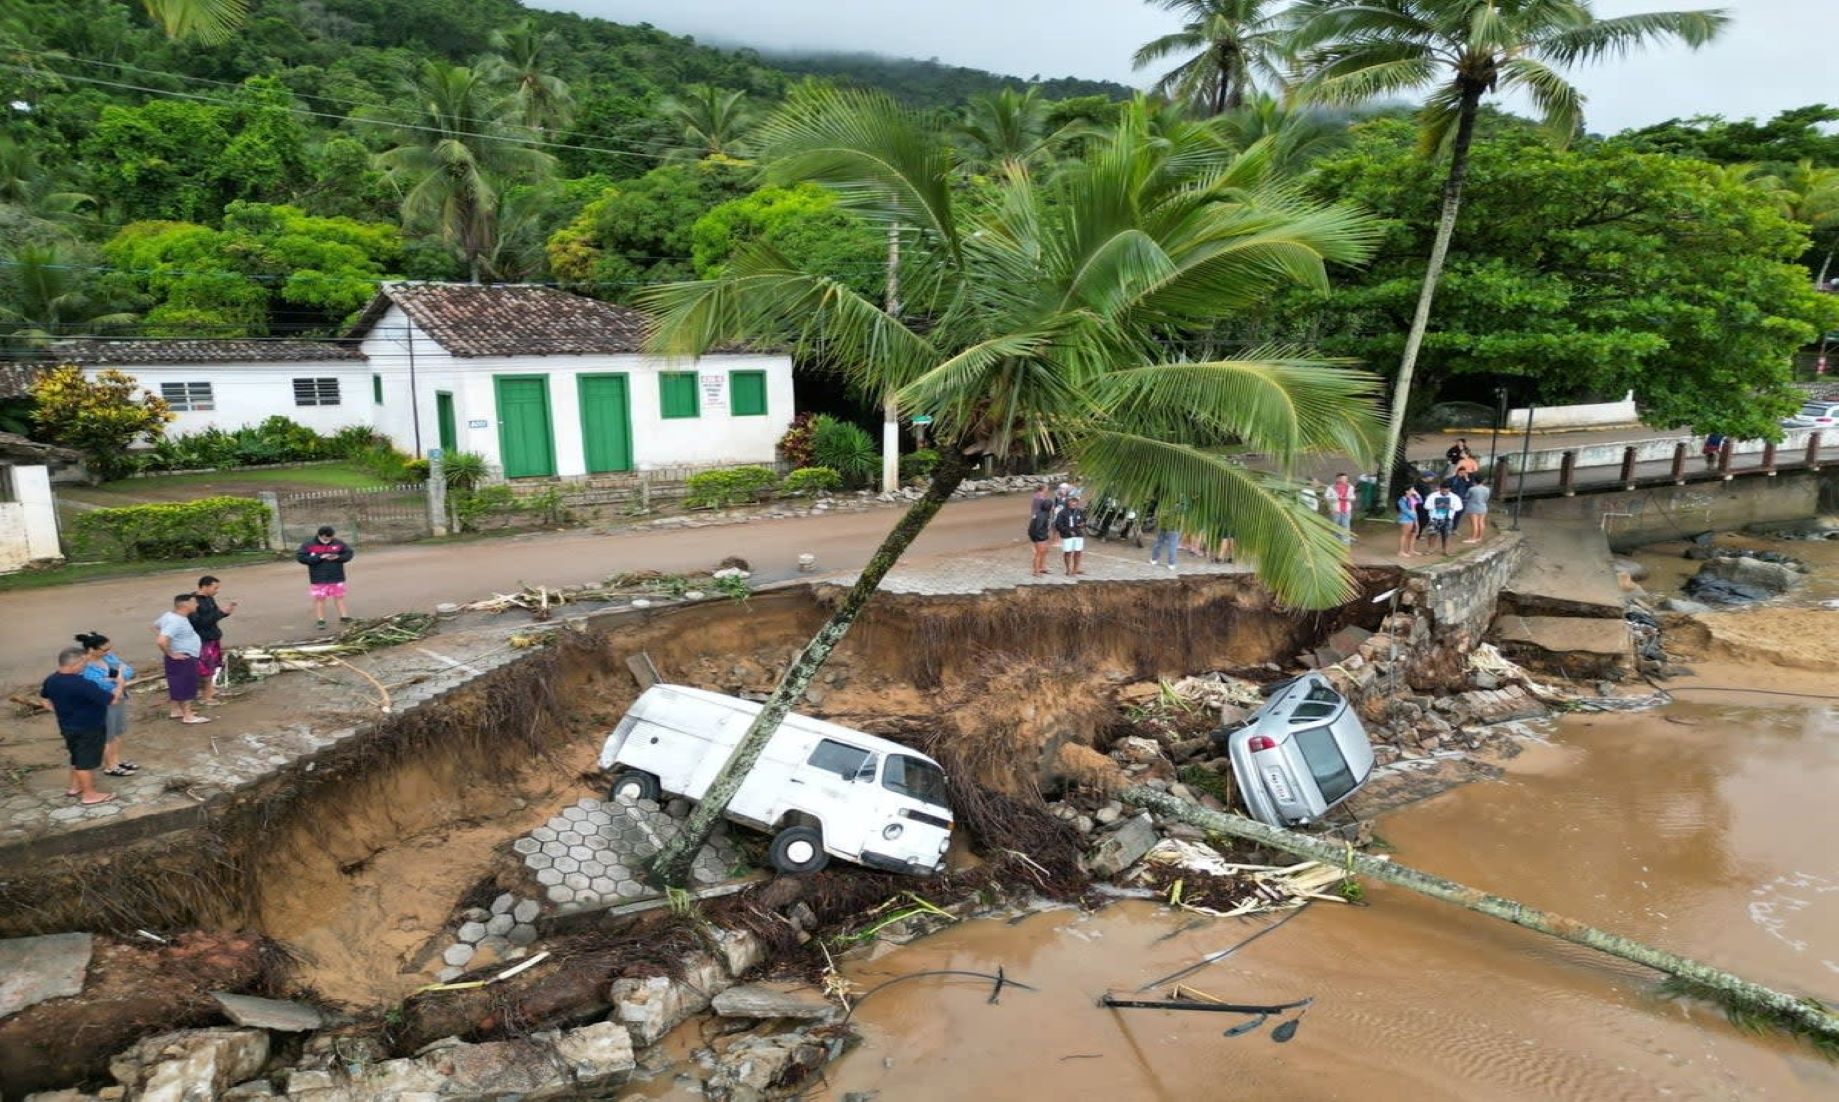 Death Toll From Floods, Landslides In Brazil Rose To 36